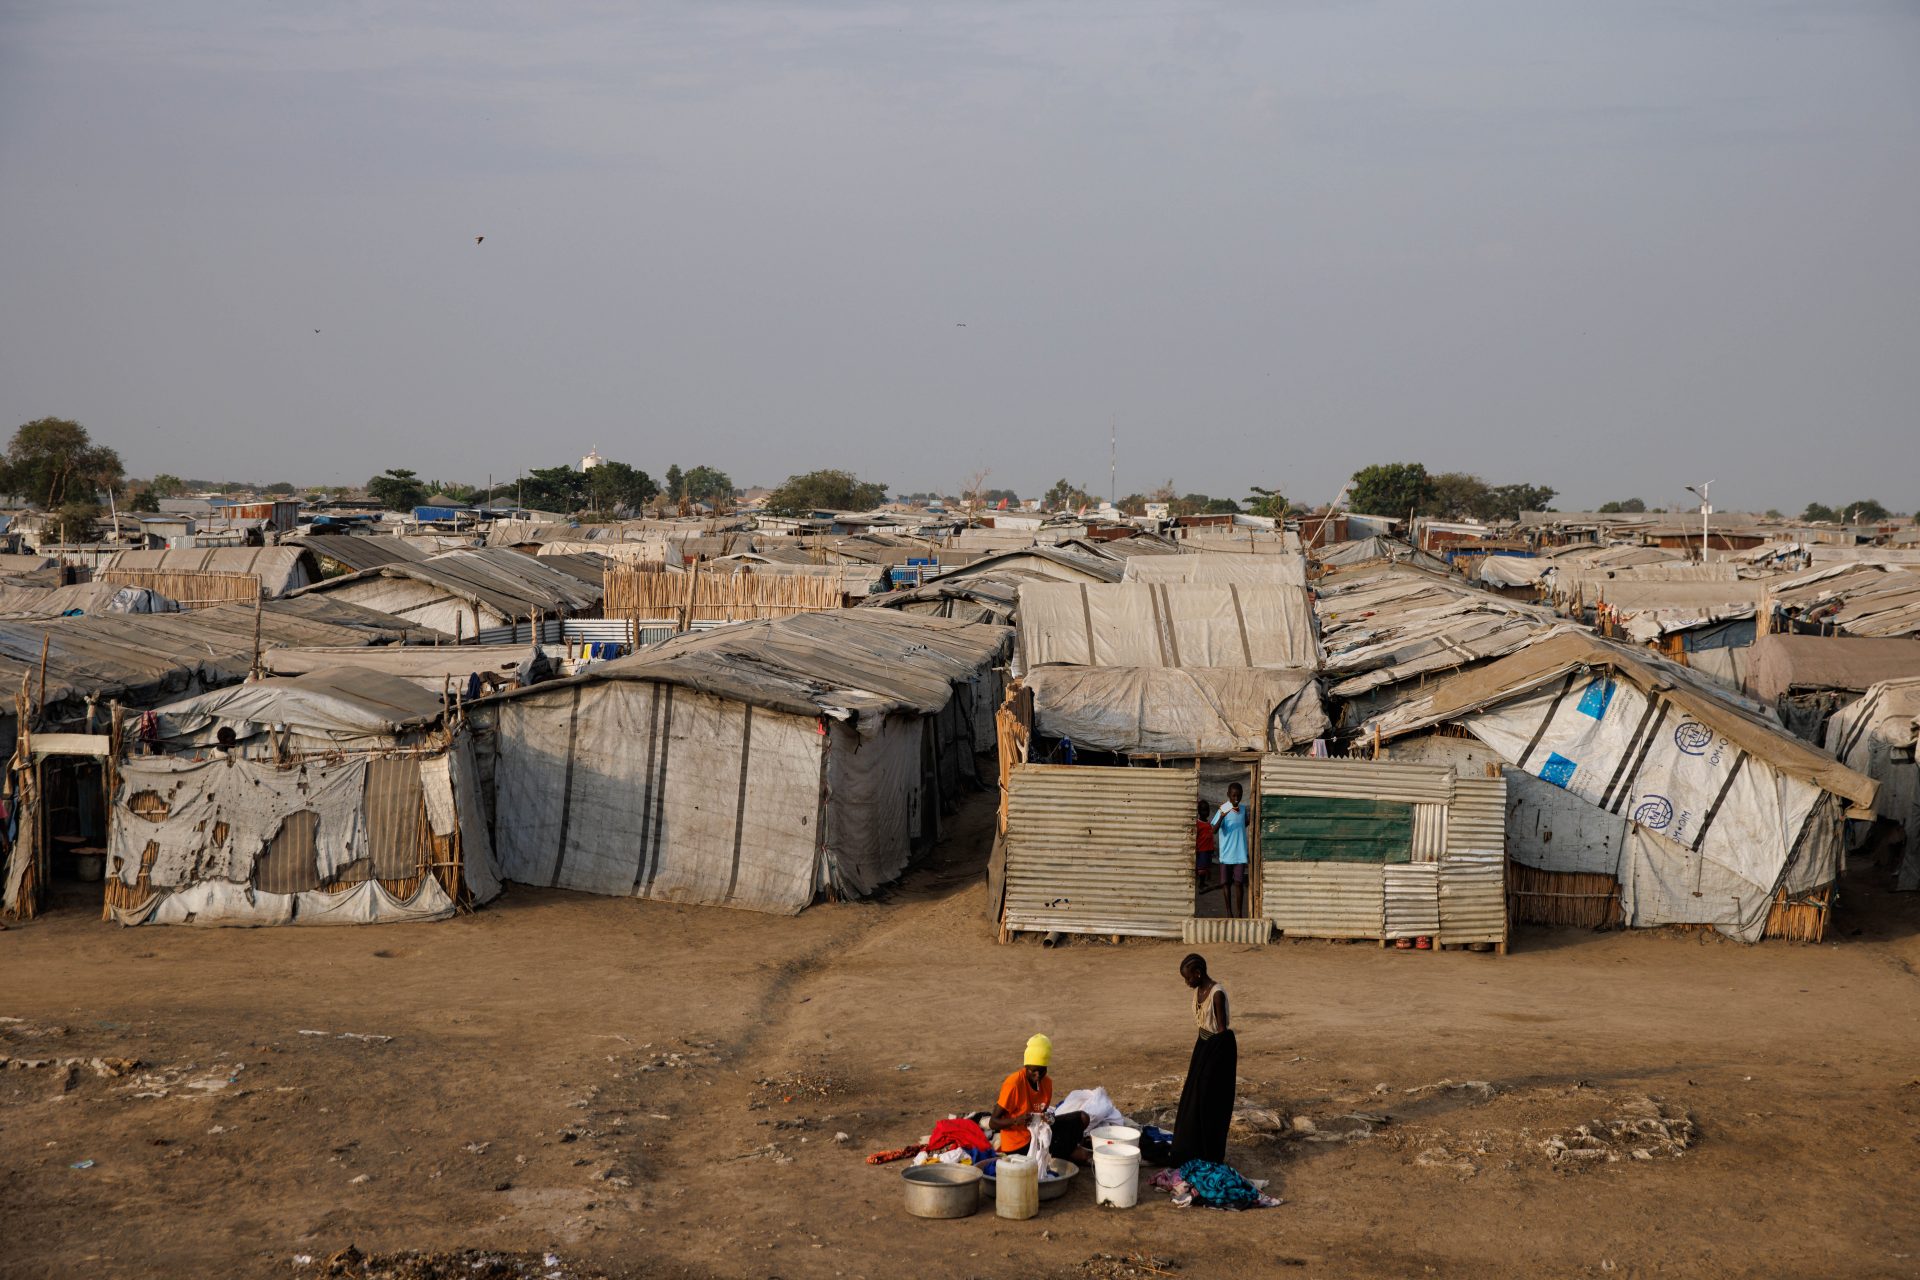 8. South Sudan